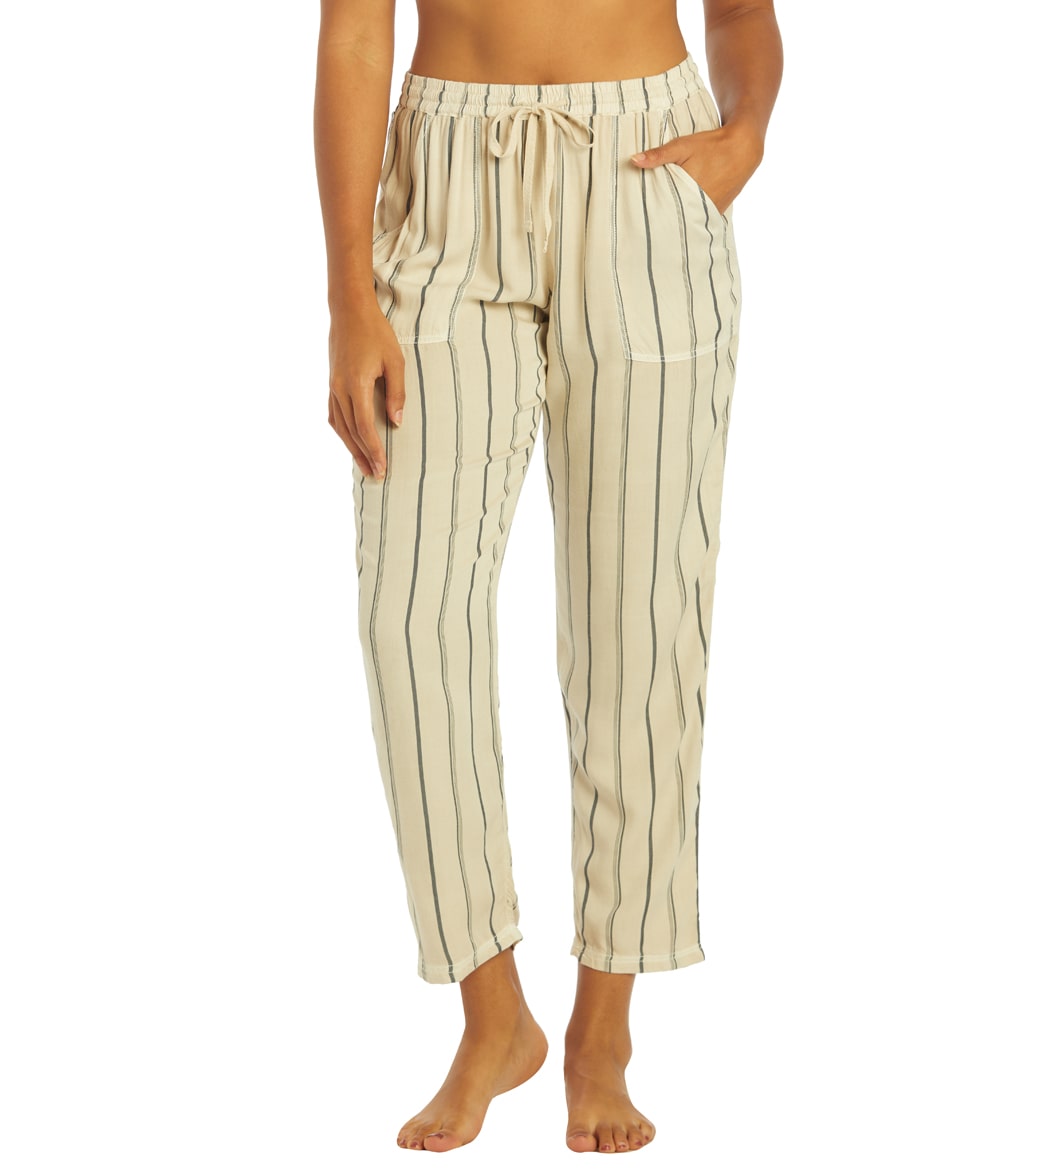 O'neill Women's Fran Stripe Woven Pants - Bone Large - Swimoutlet.com